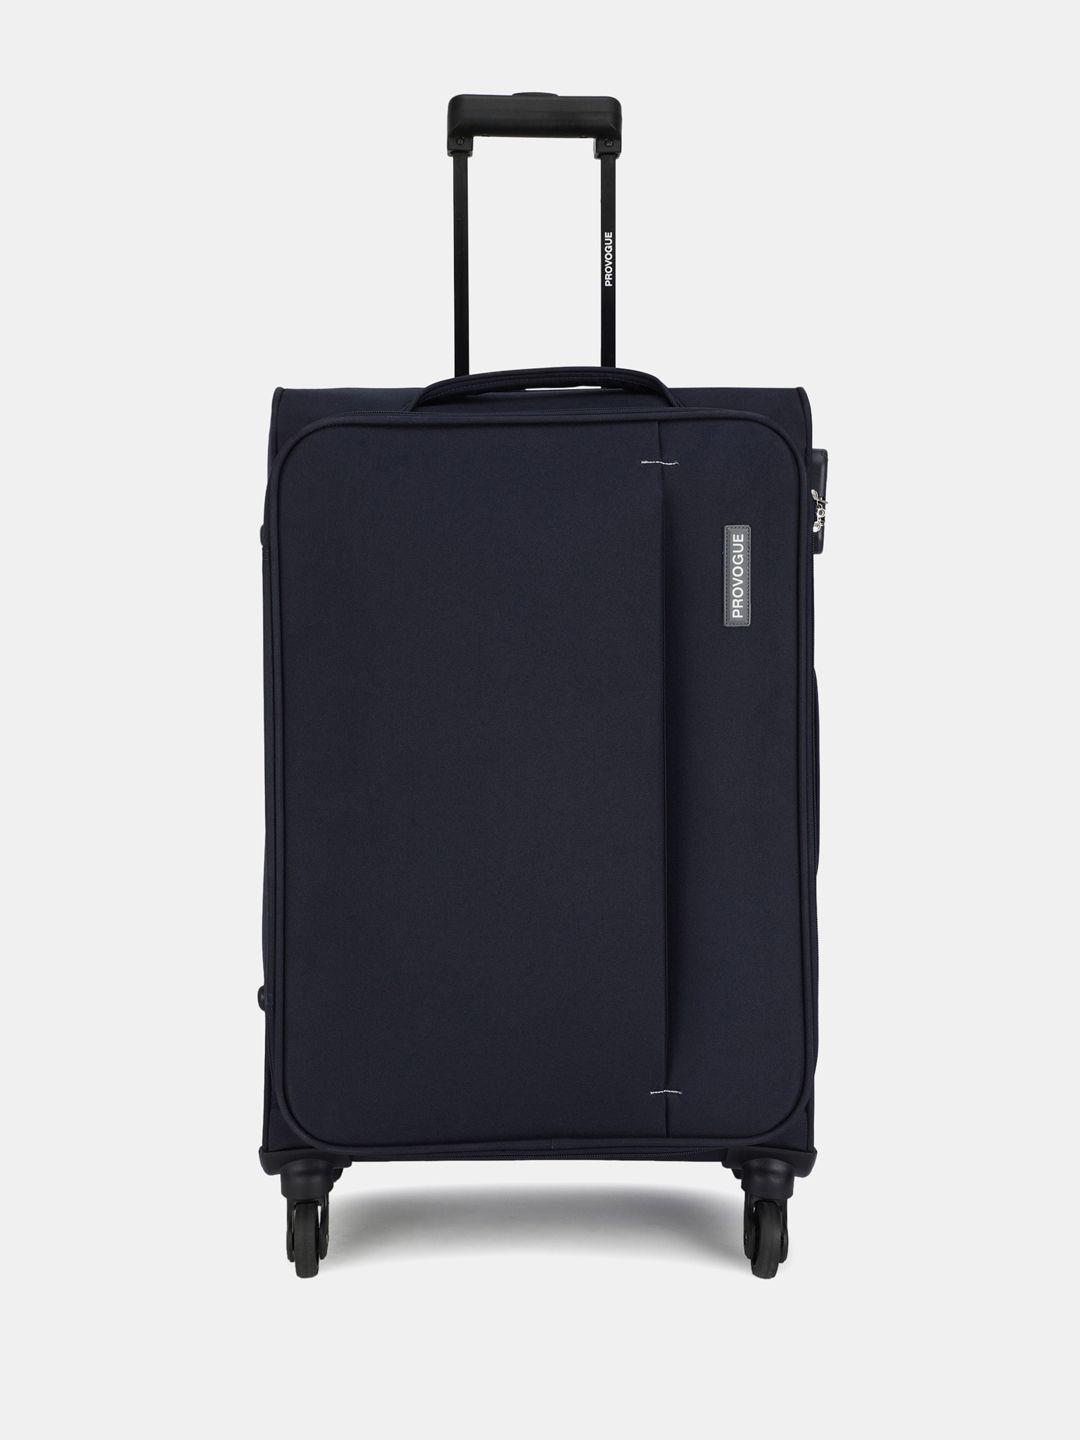 provogue edge medium soft trolley suitcase - 65 cm